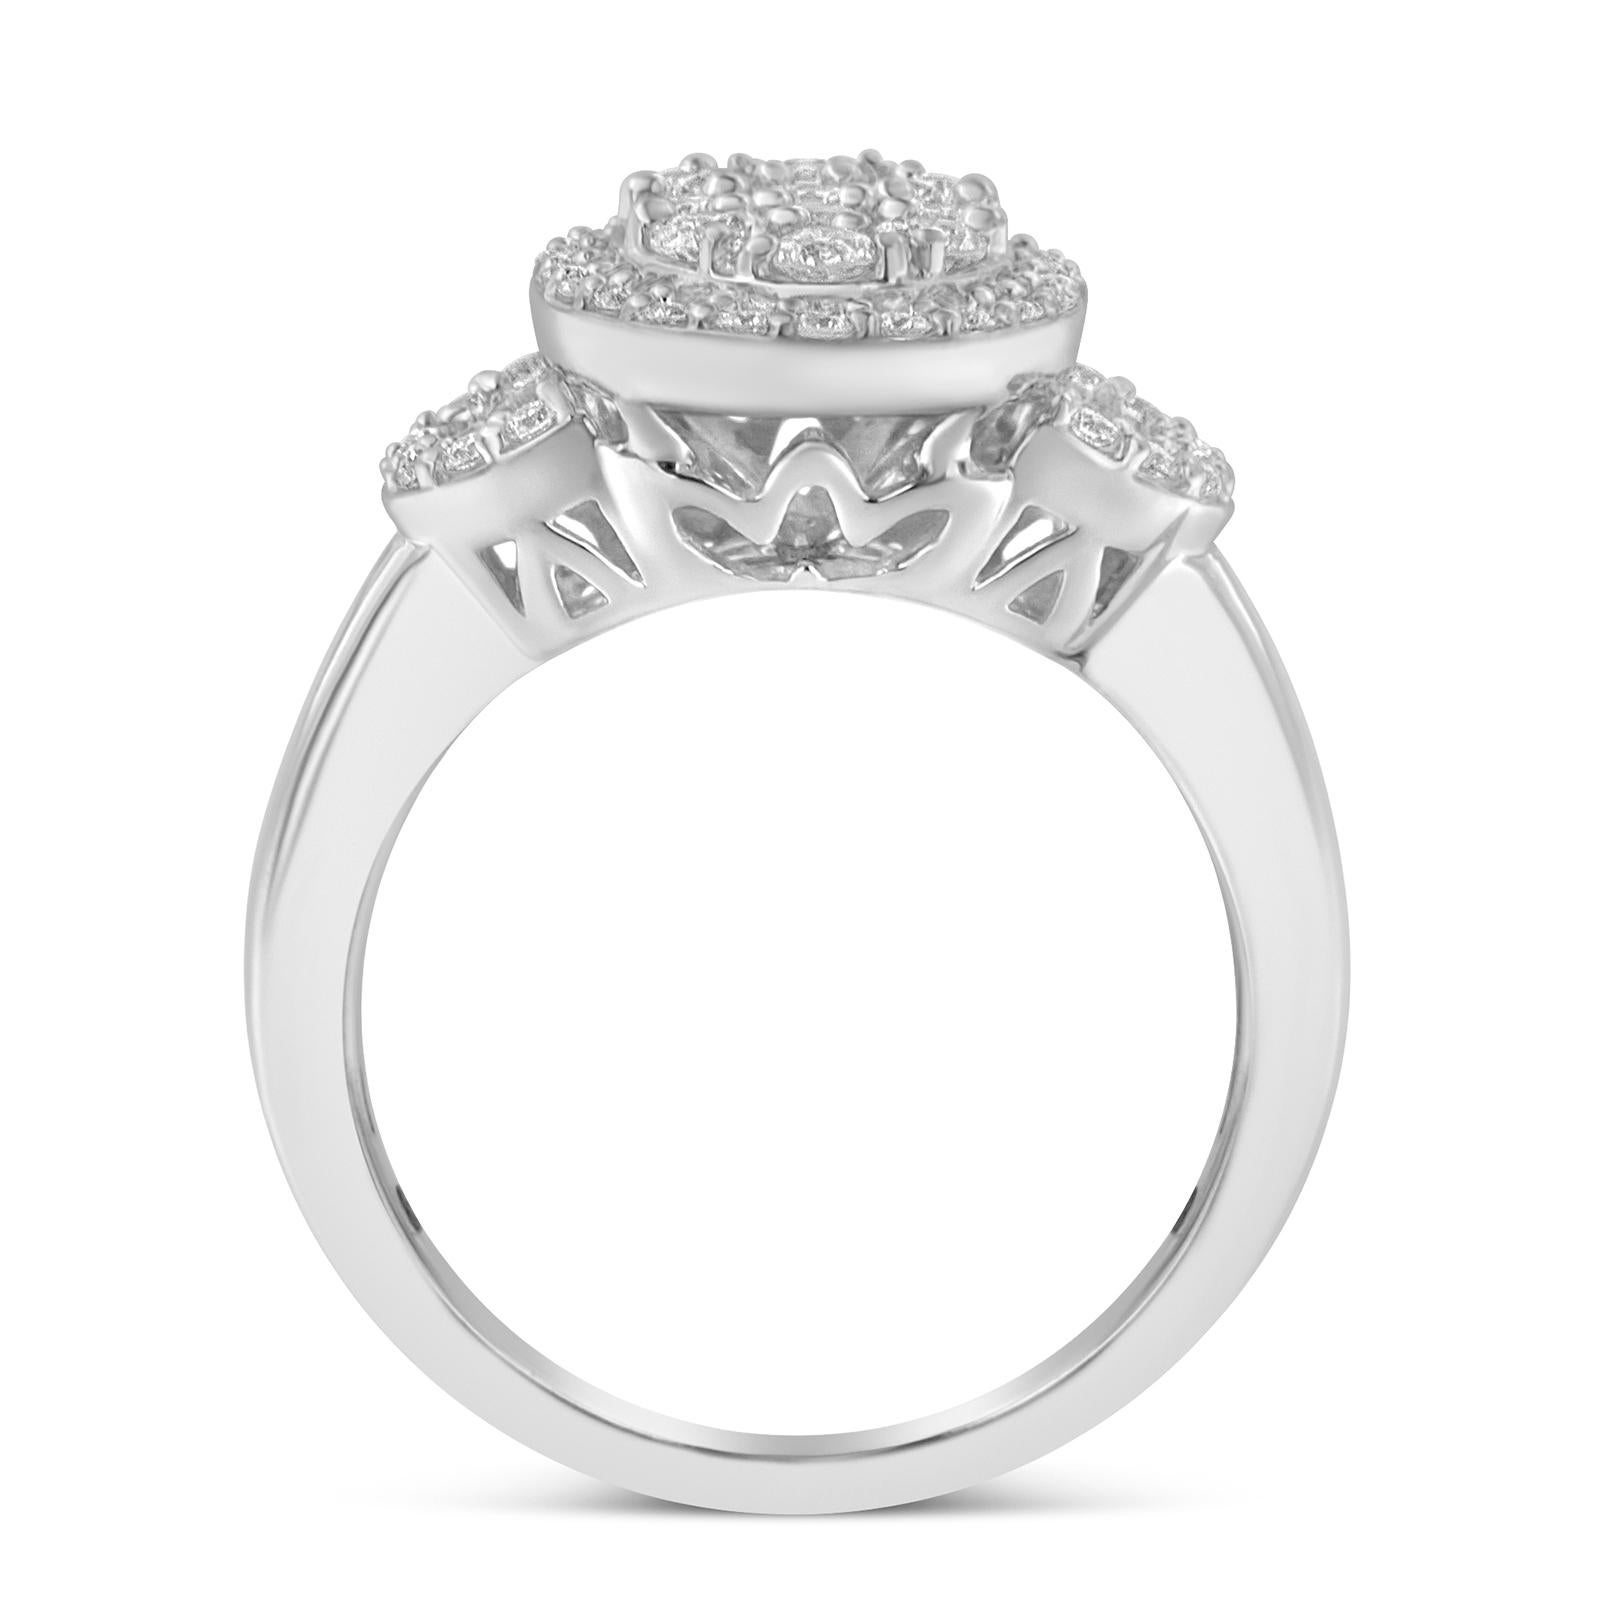 For Sale:  10K White Gold 1.0 Carat Diamond Cluster Ring 2